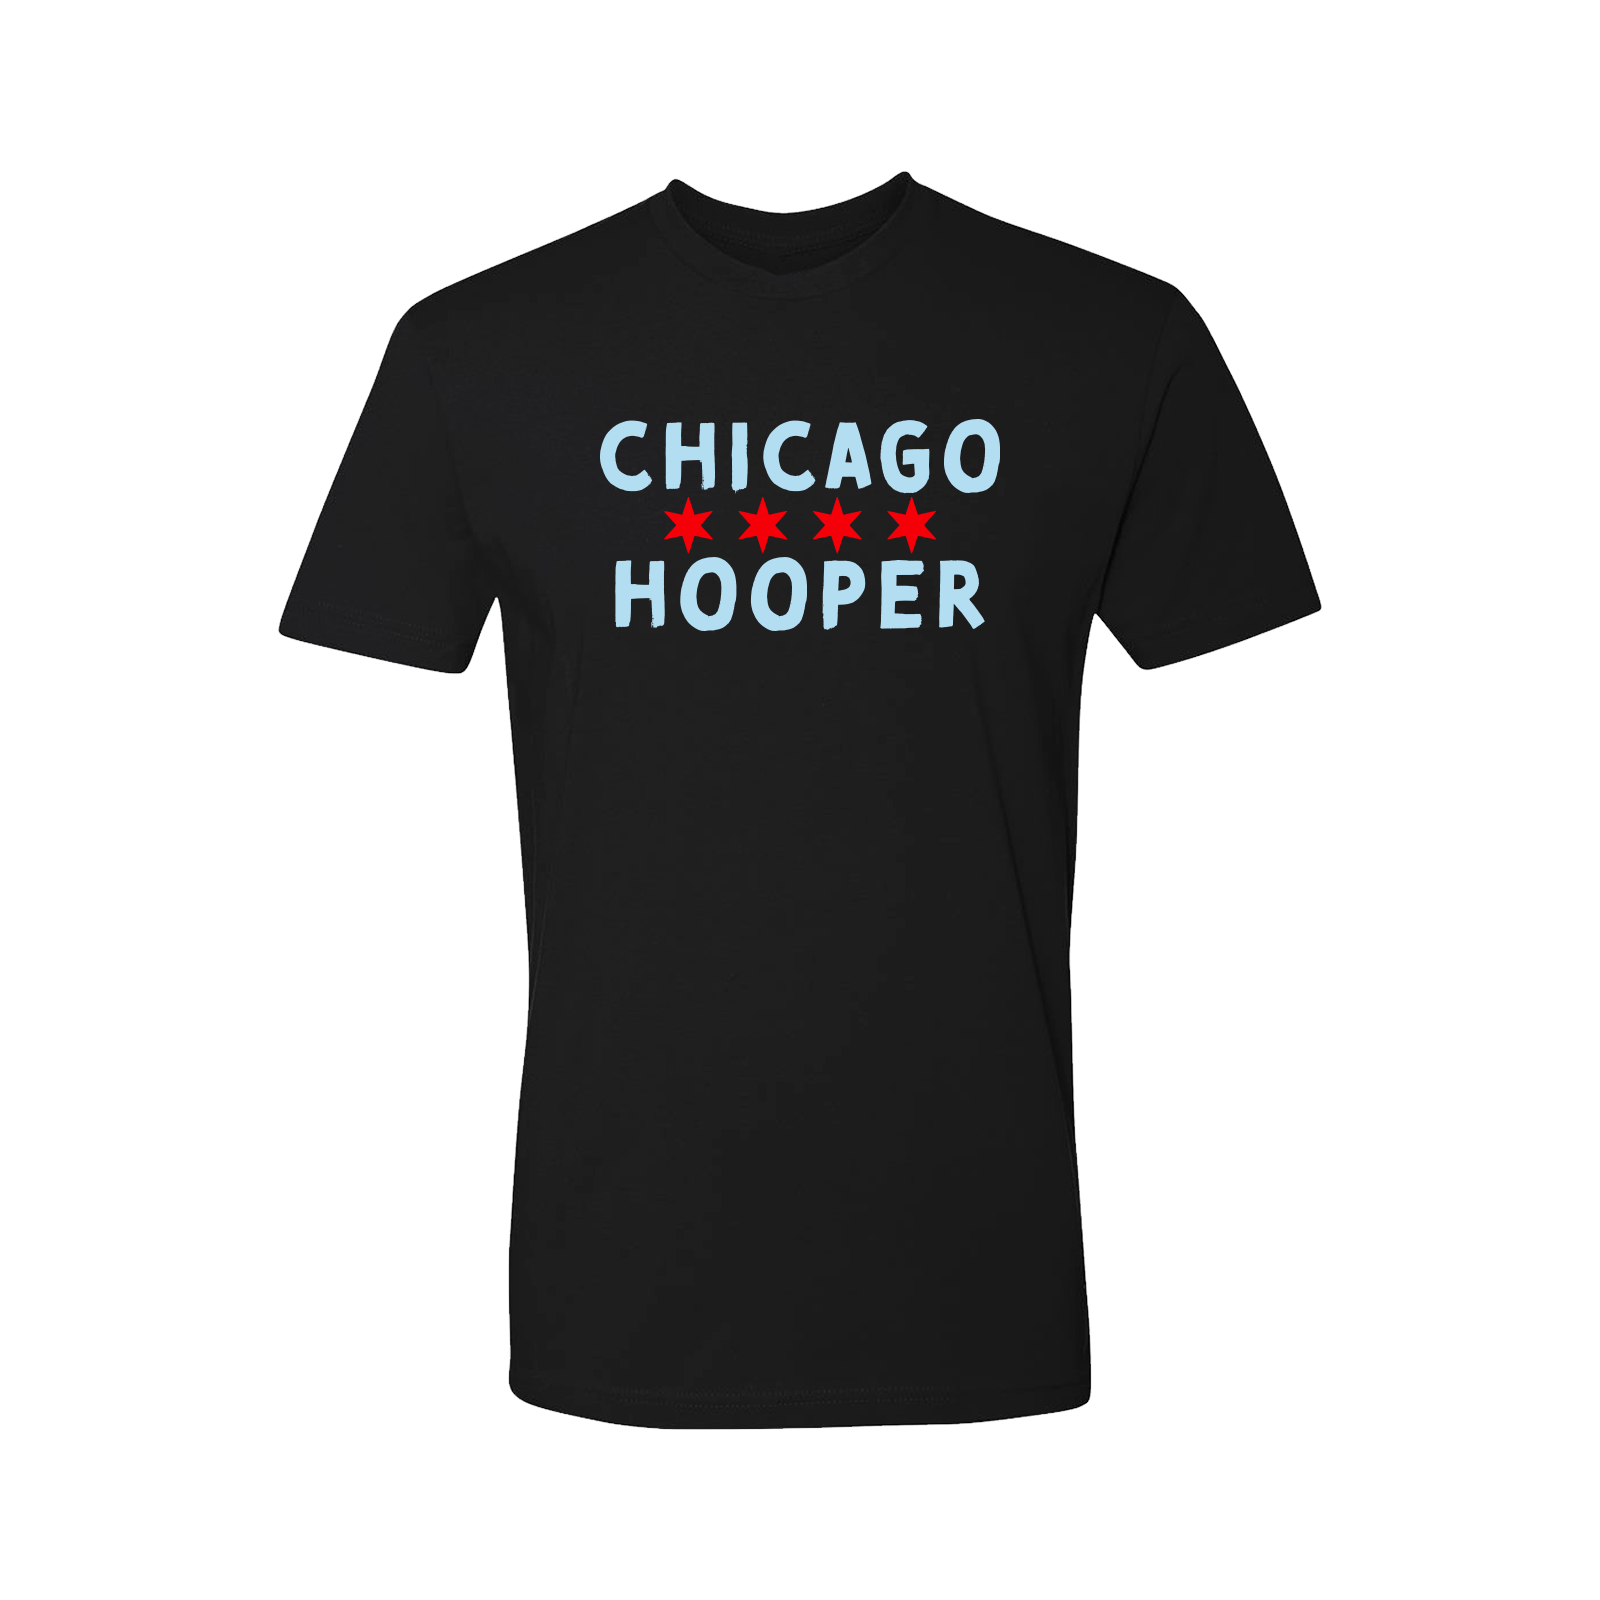 Chicago Hooper Short Sleeve Shirt - Adult